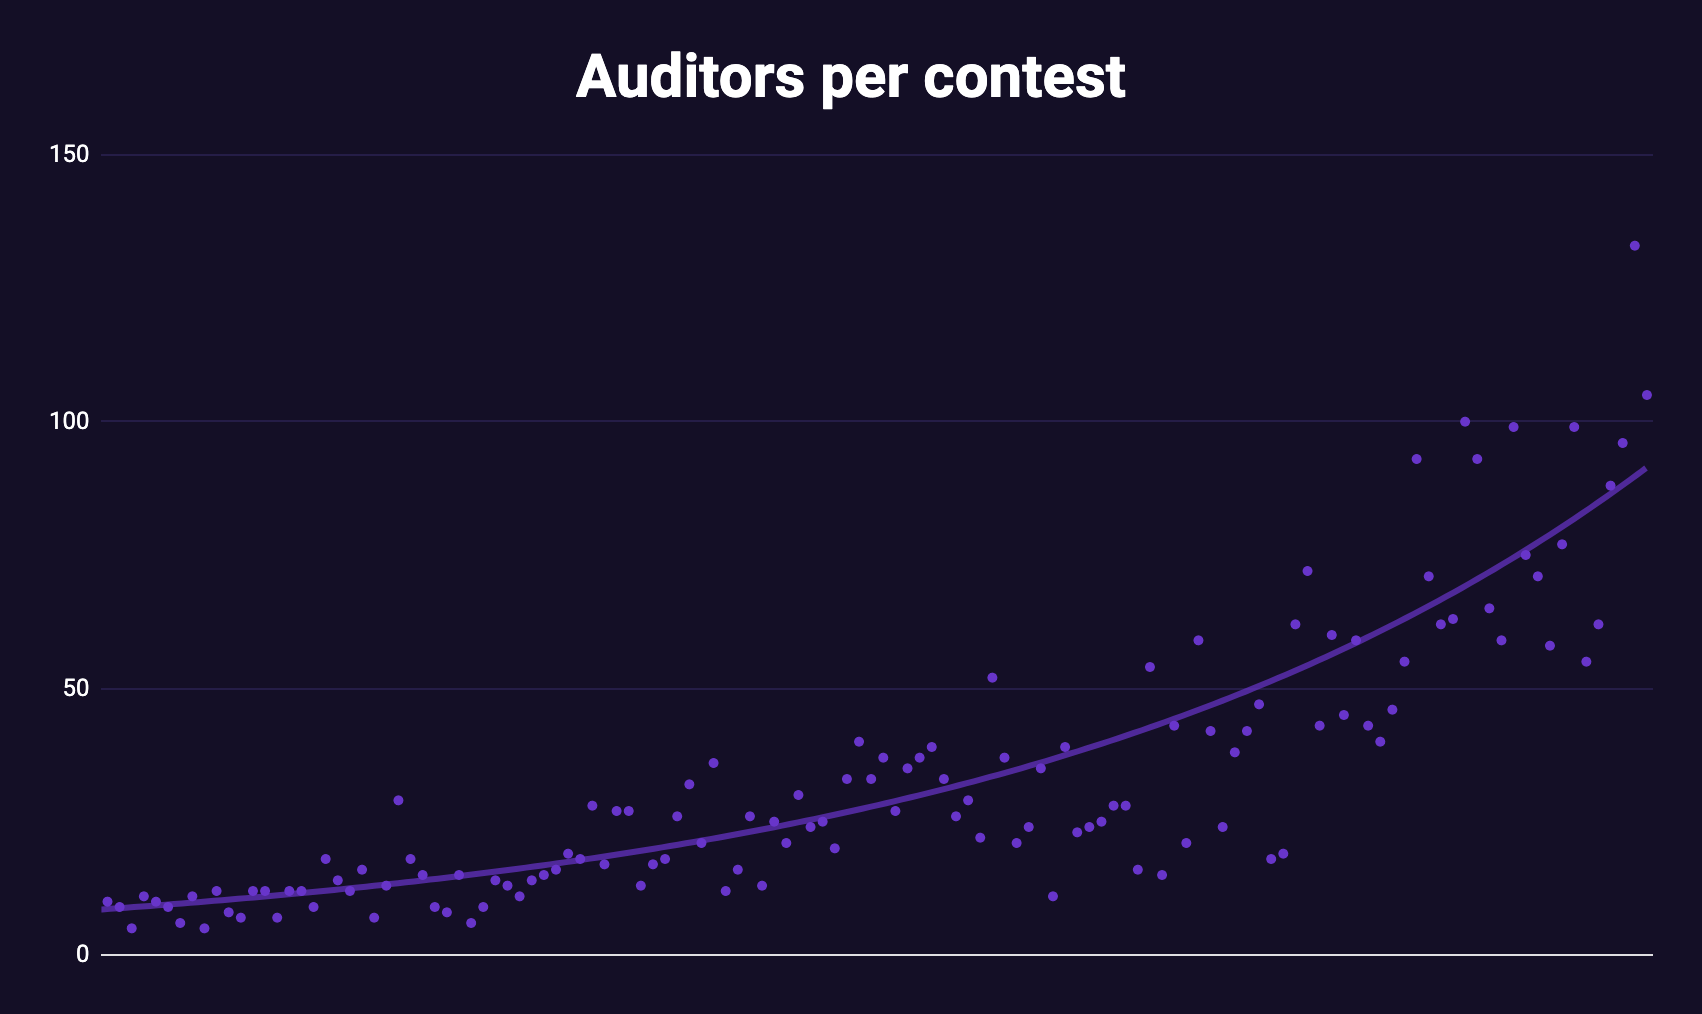 Code4rena audits now averaging 80 auditors per contest